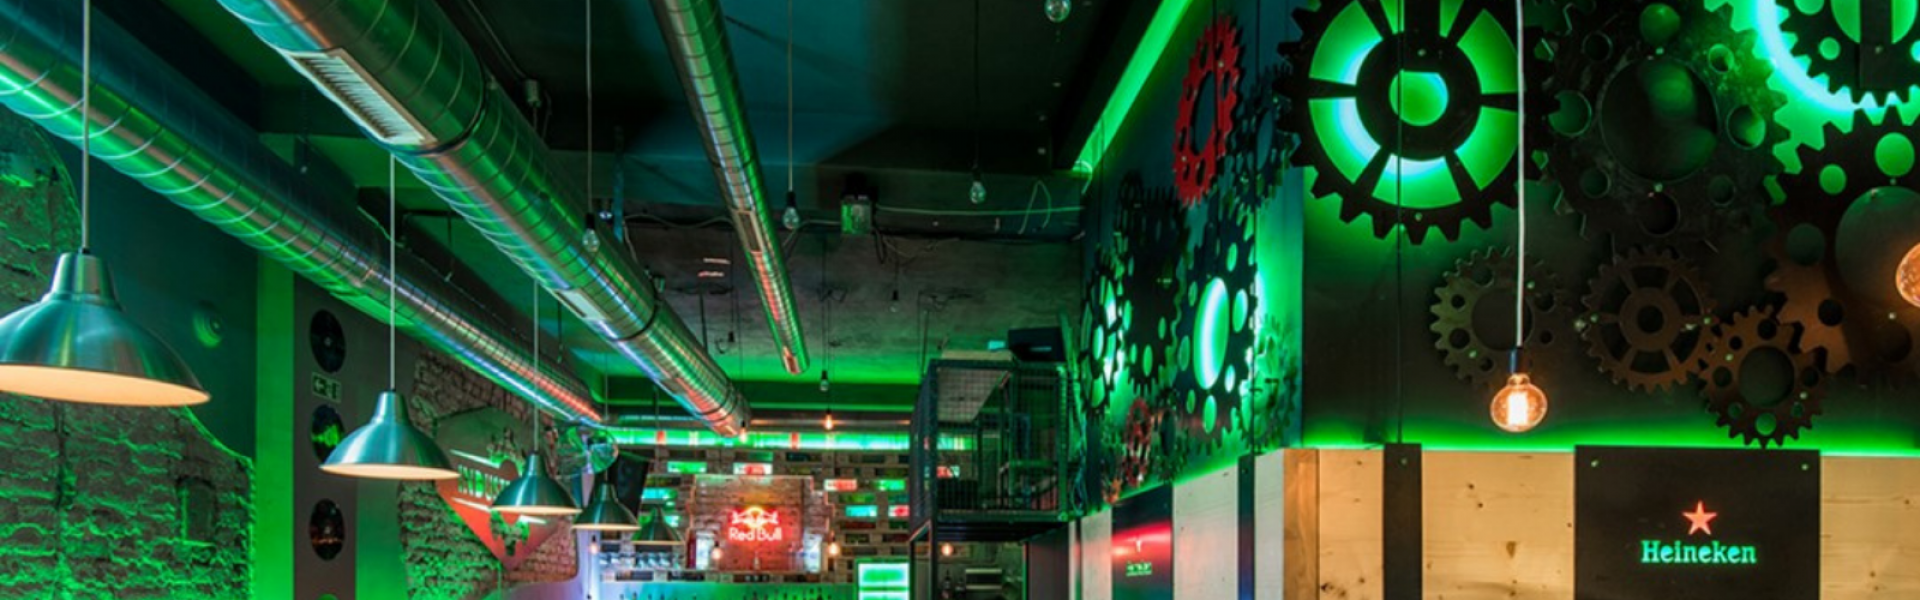 Bar industriel Heineken